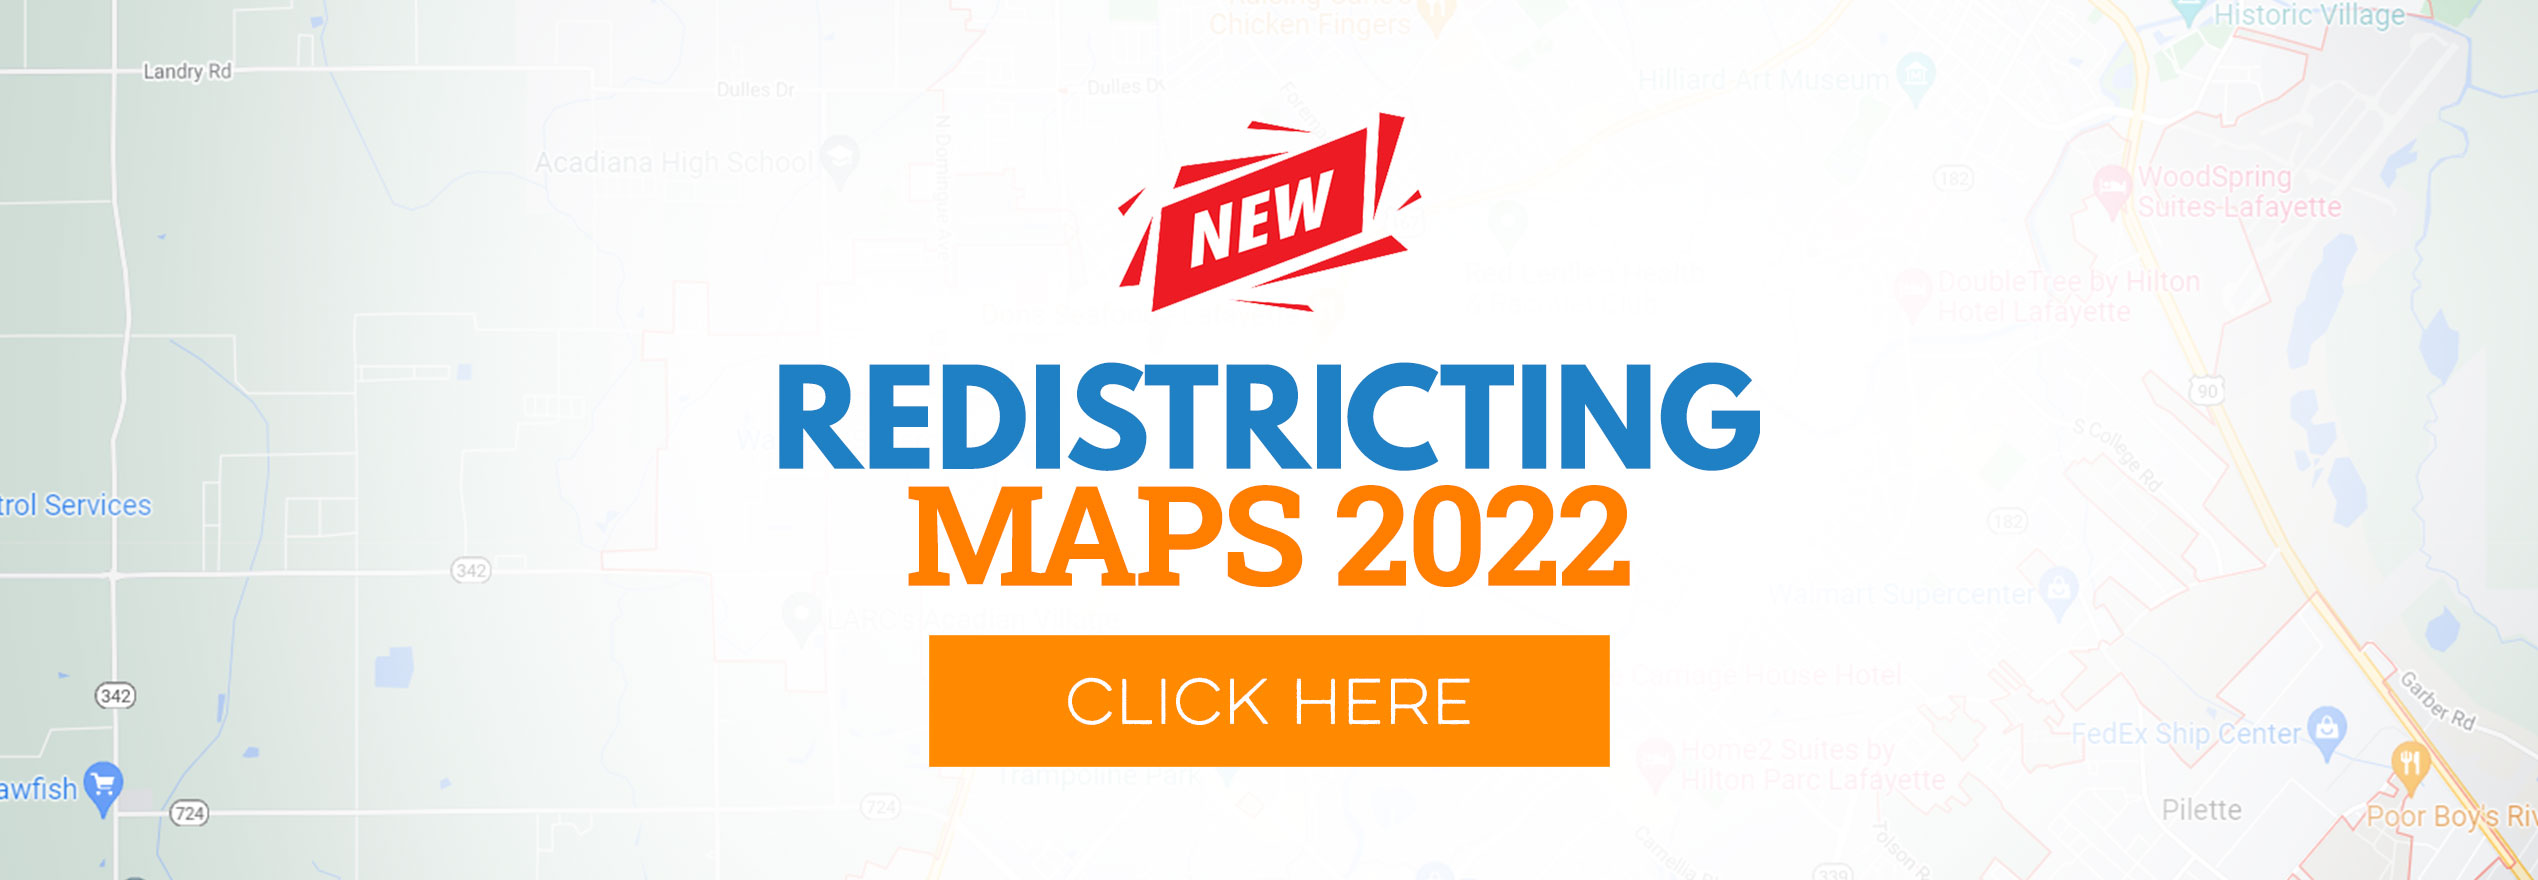 2022 Redistricting Maps